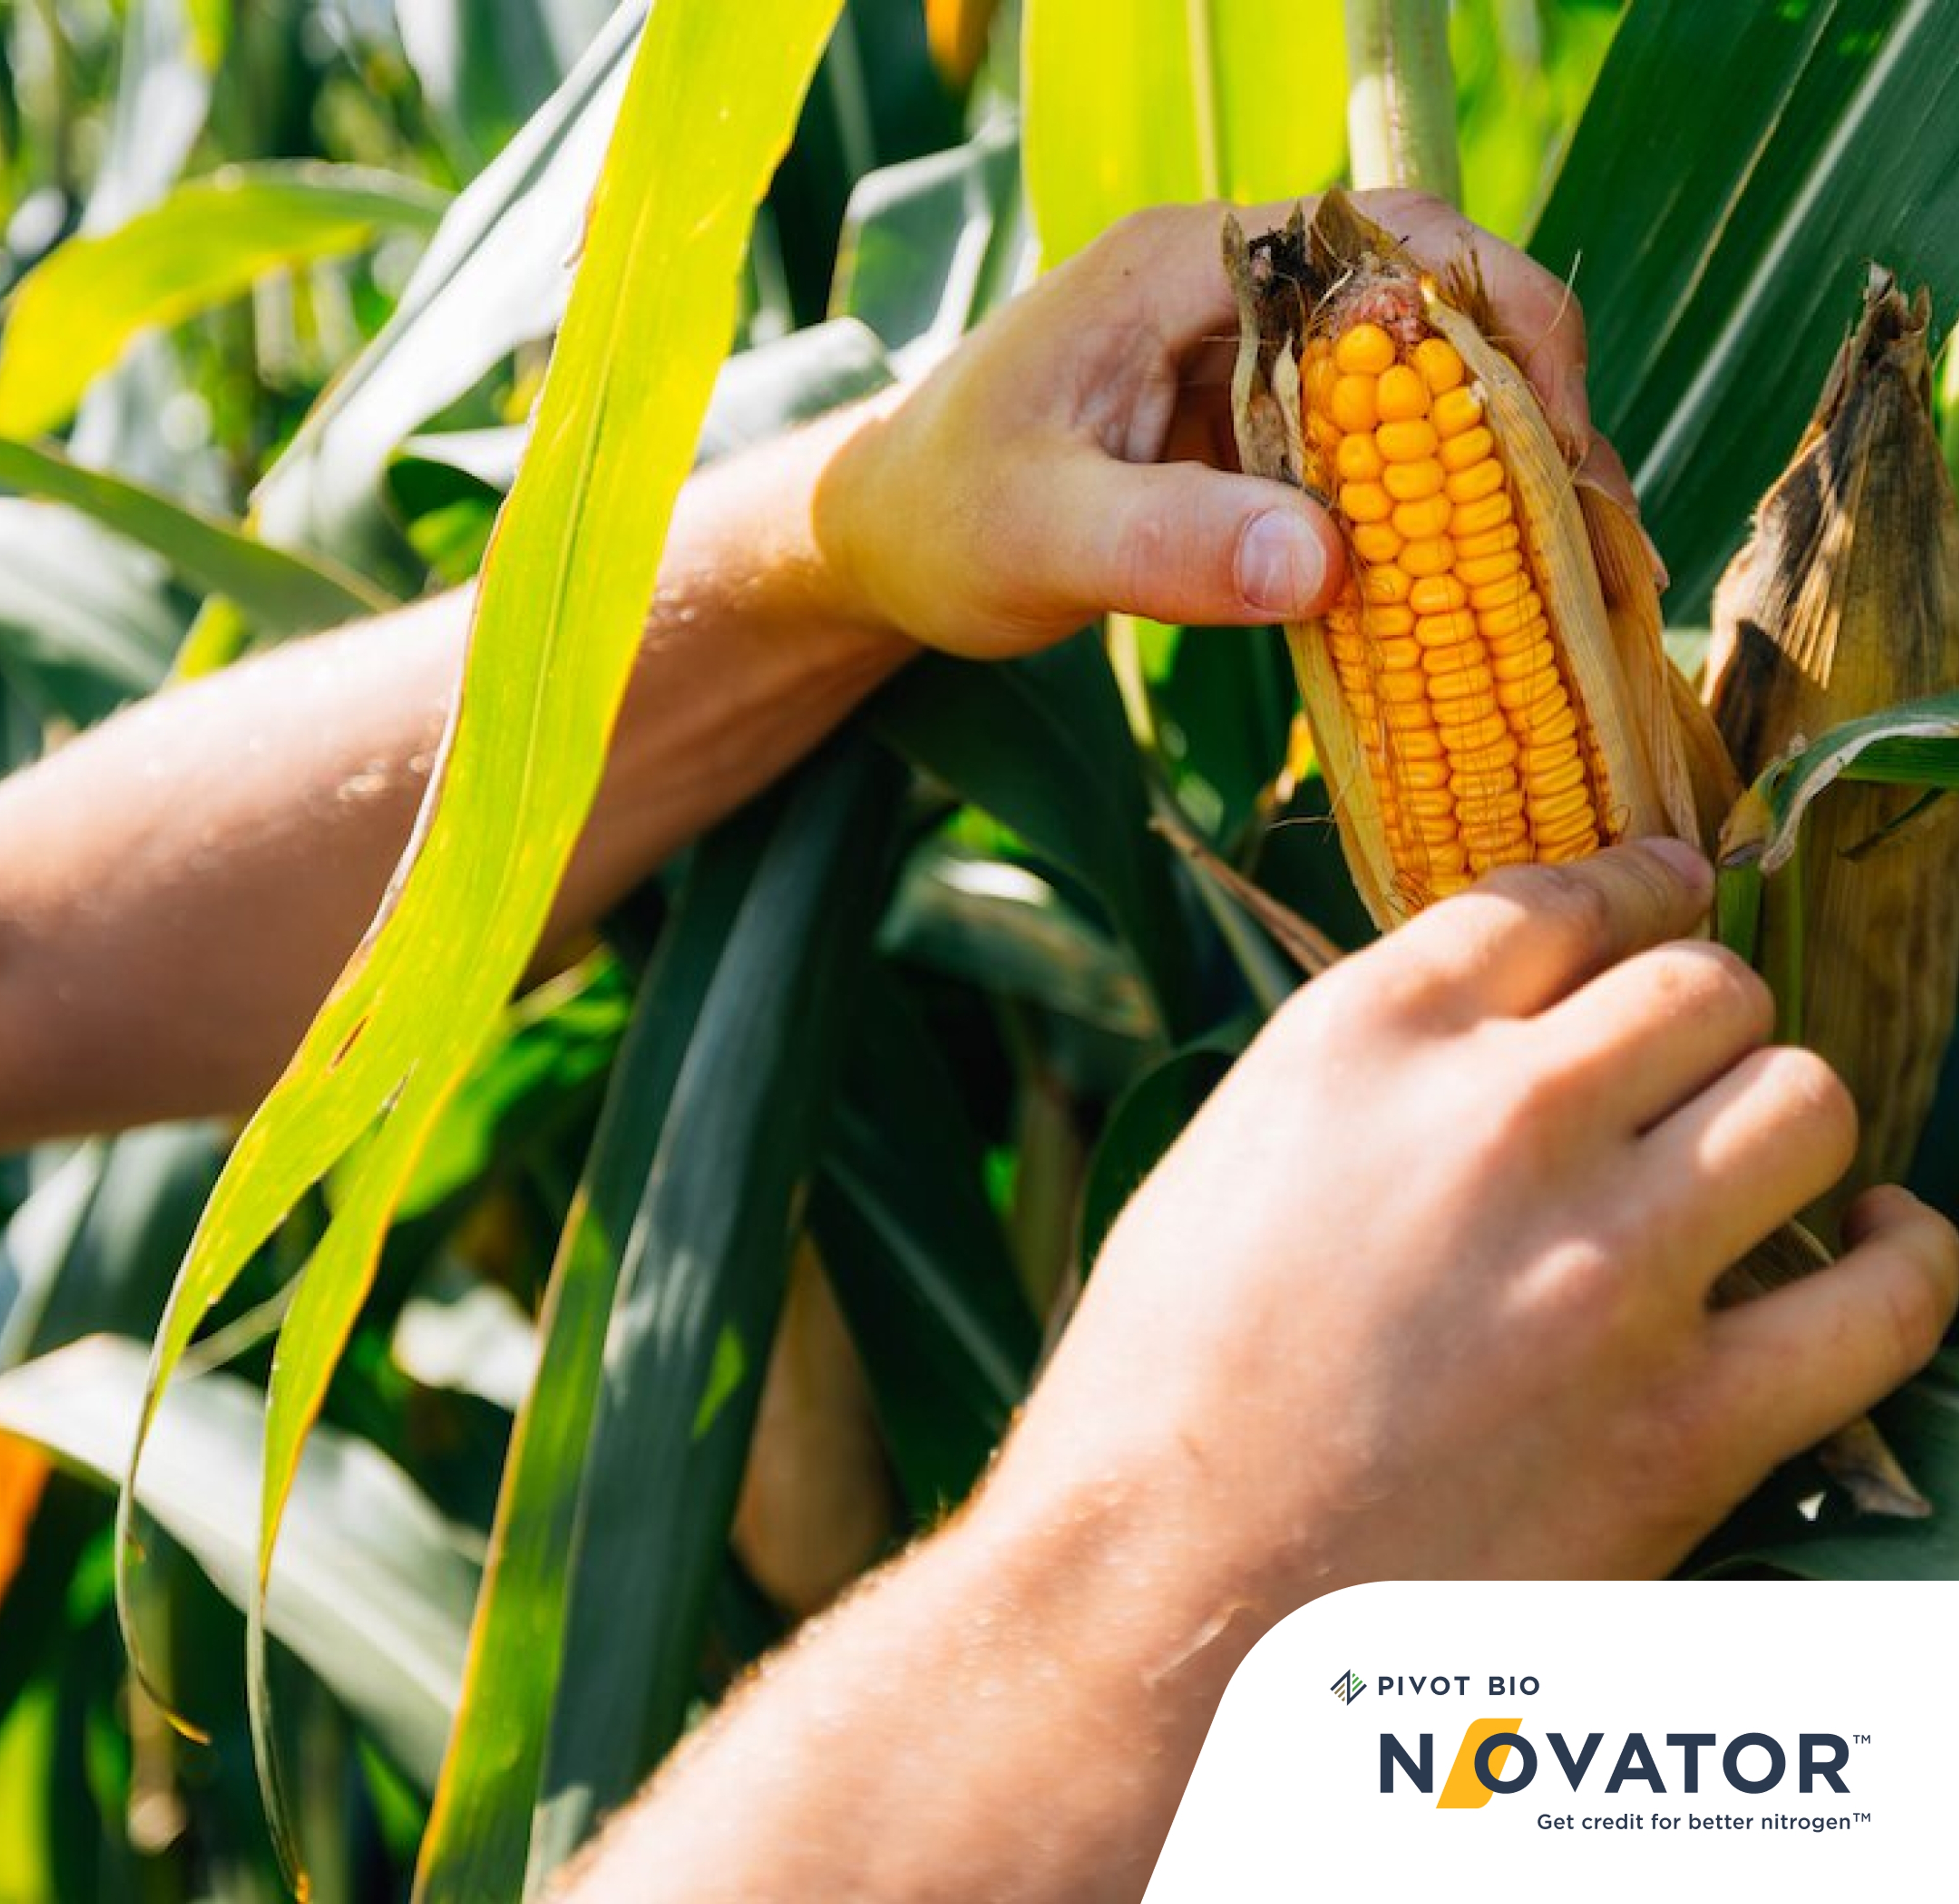 Farmer holding an ear of corn and N-OVATOR program logo callout